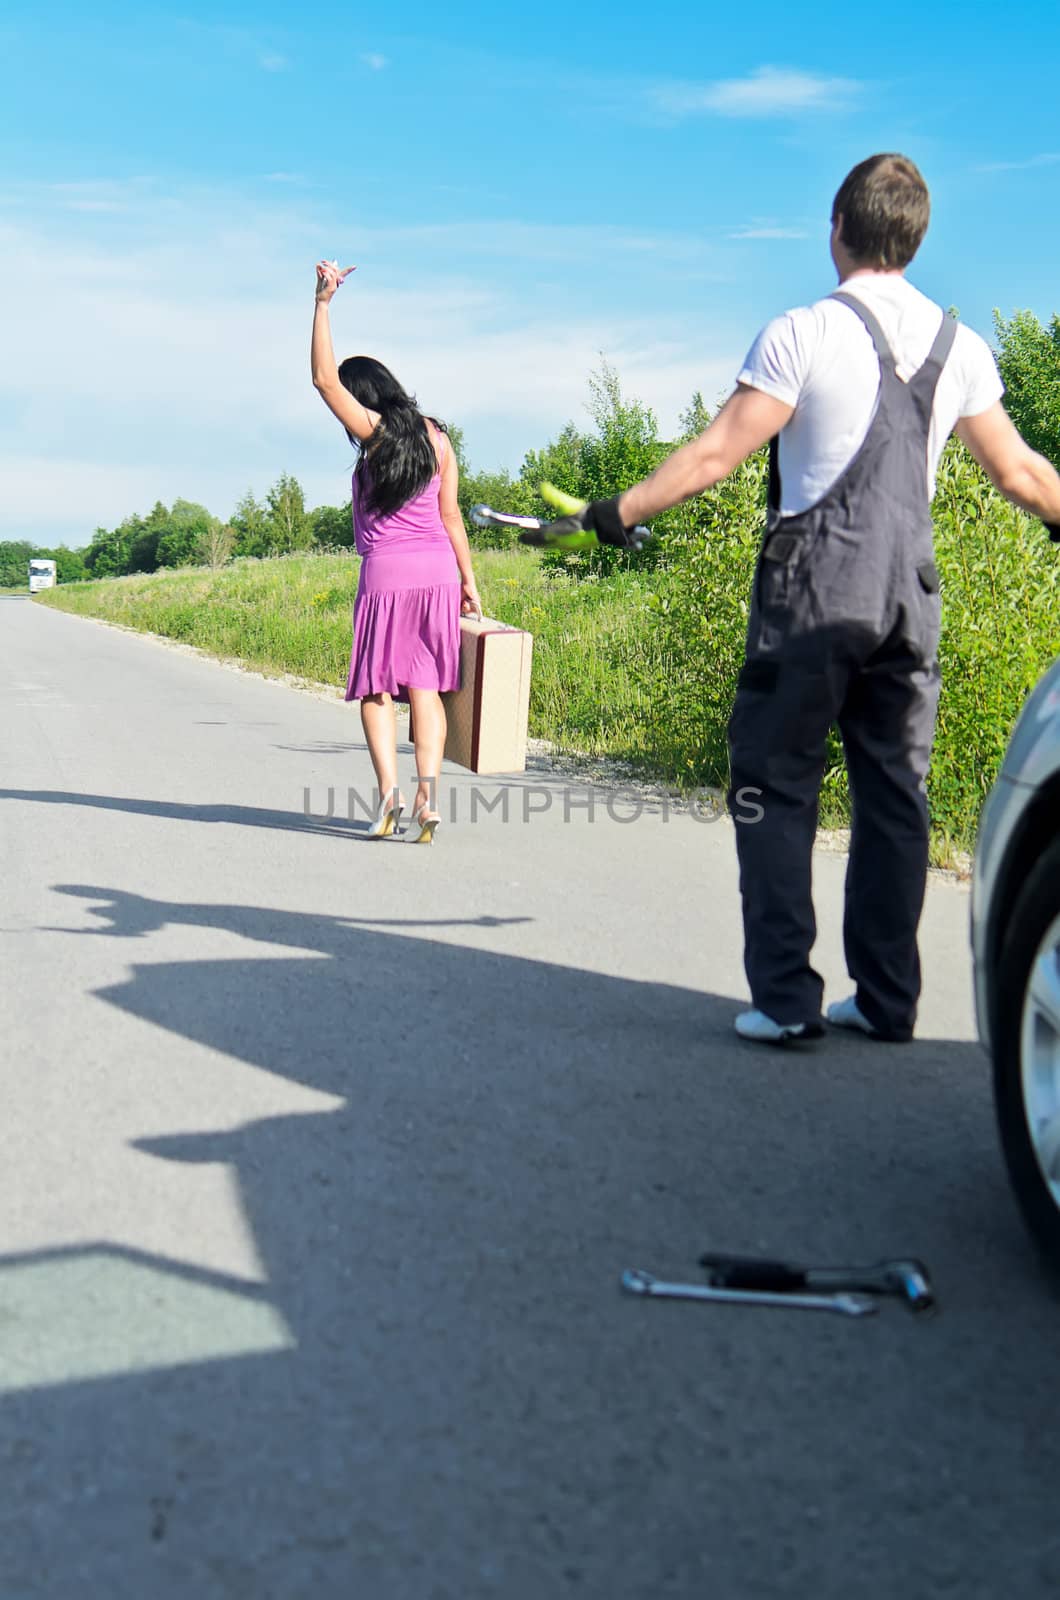 Wonam is leaving mechanic alone near the broken car. by dmitrimaruta